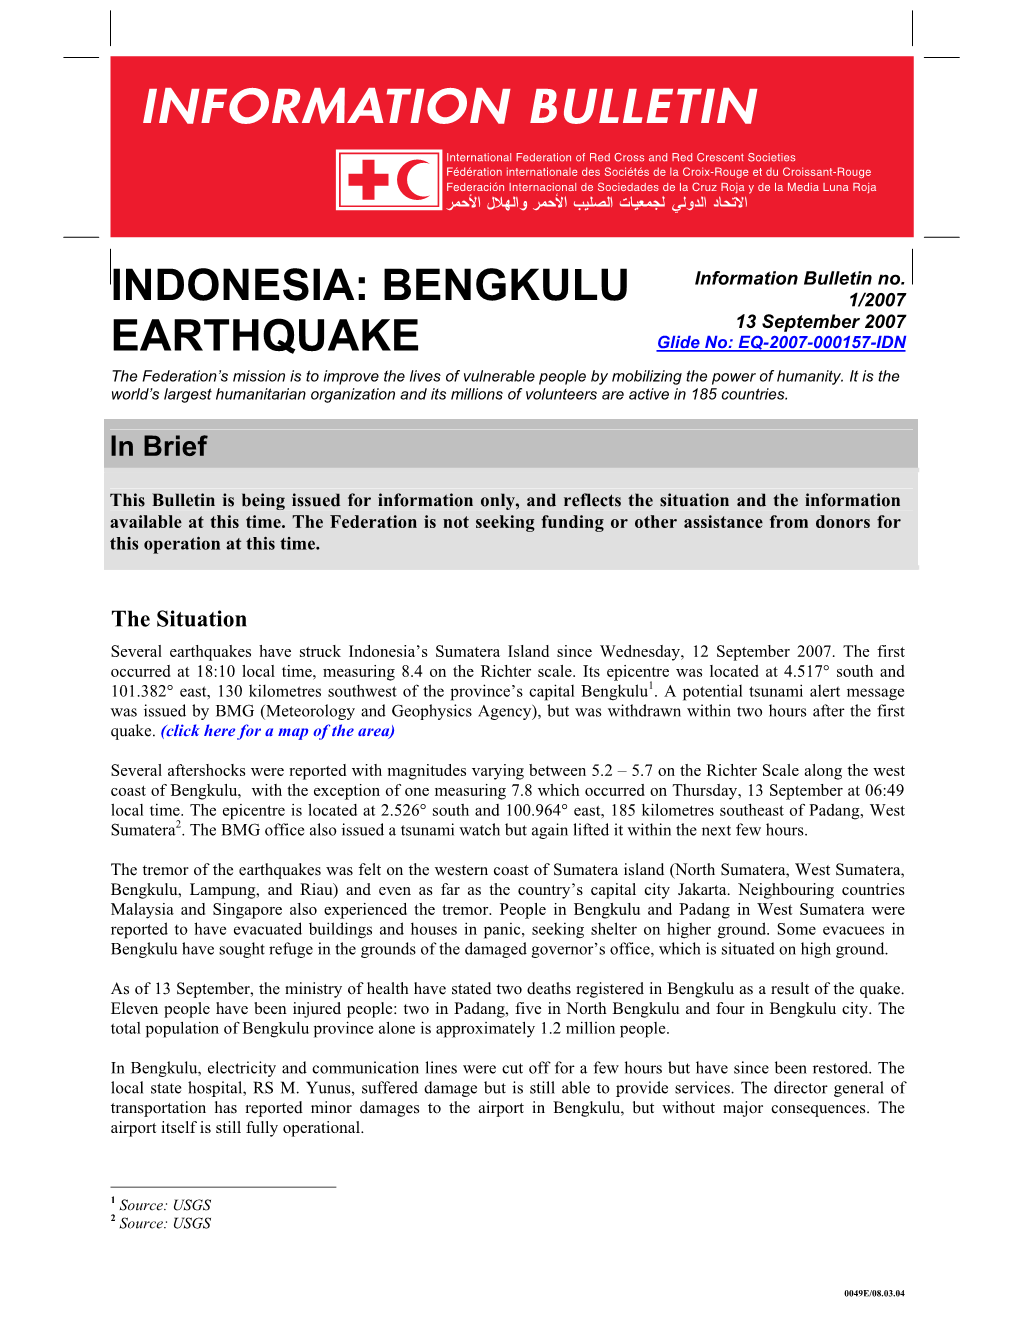 Indonesia: Bengkulu Earthquake; Information Bulletin No